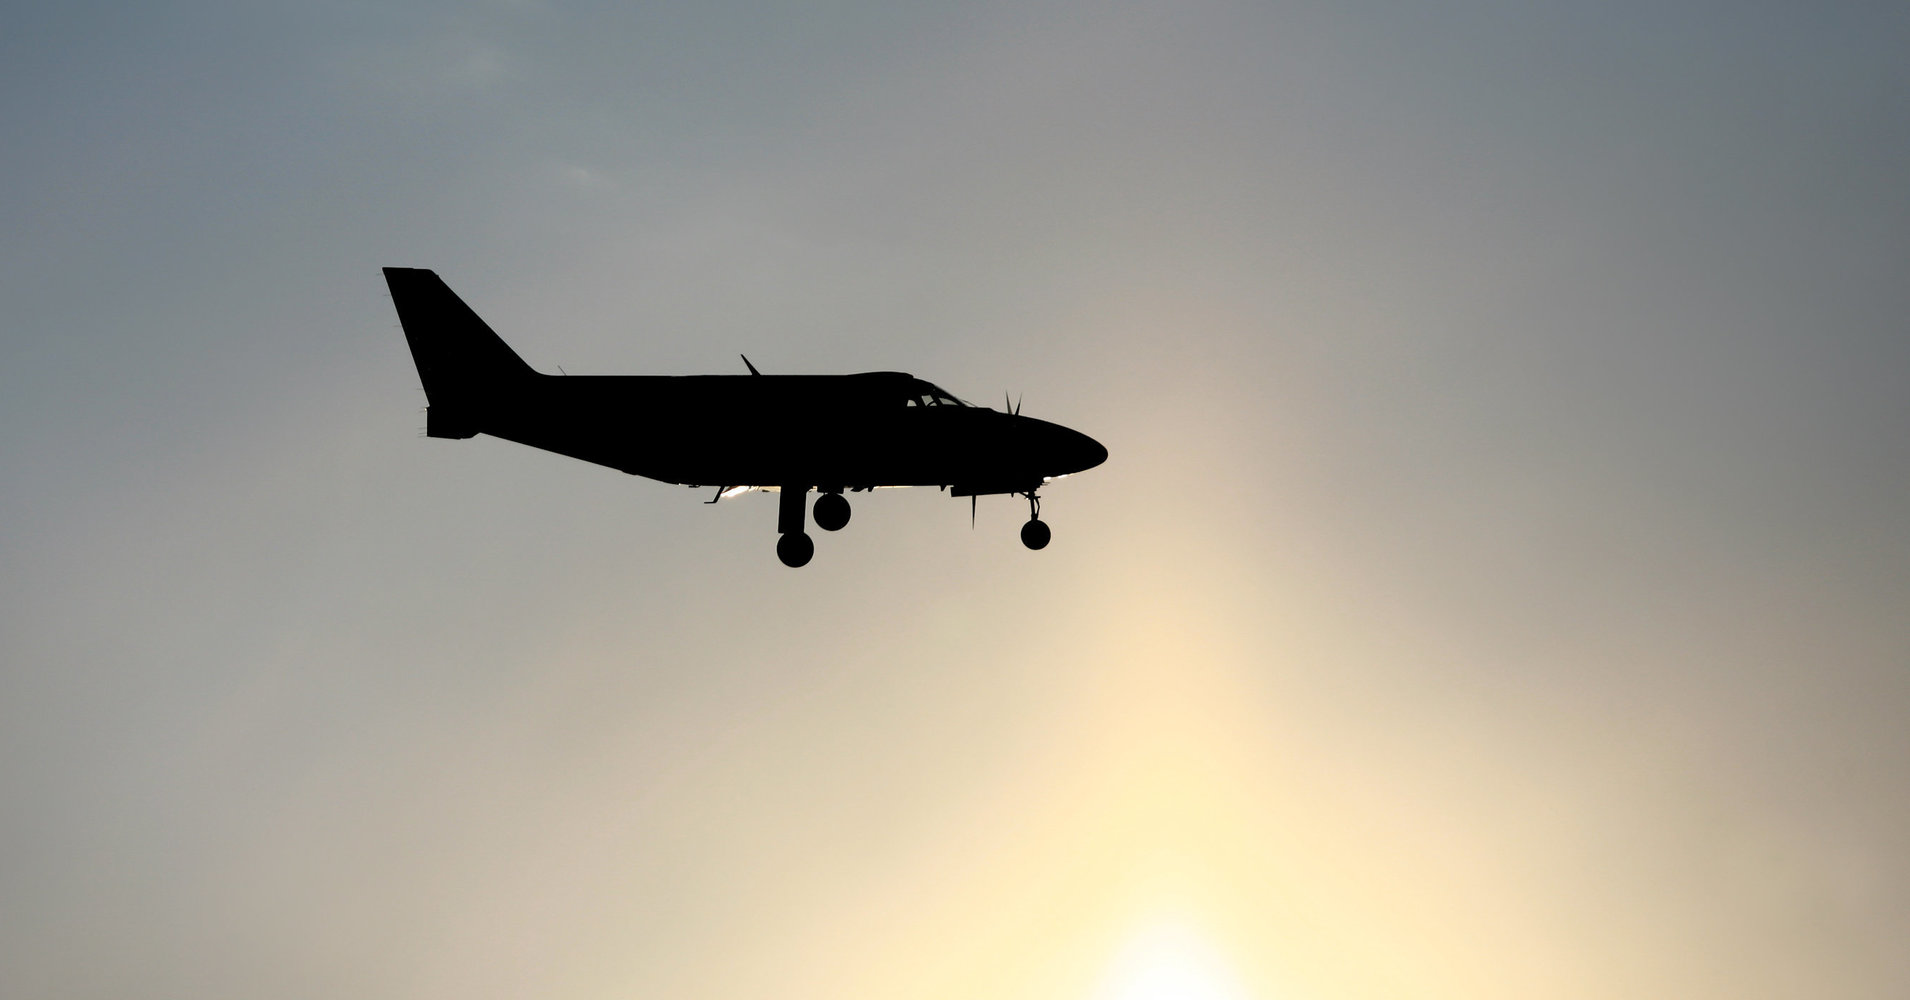 Sleeping Vortex Air Pilot Misses Australian Island Destination